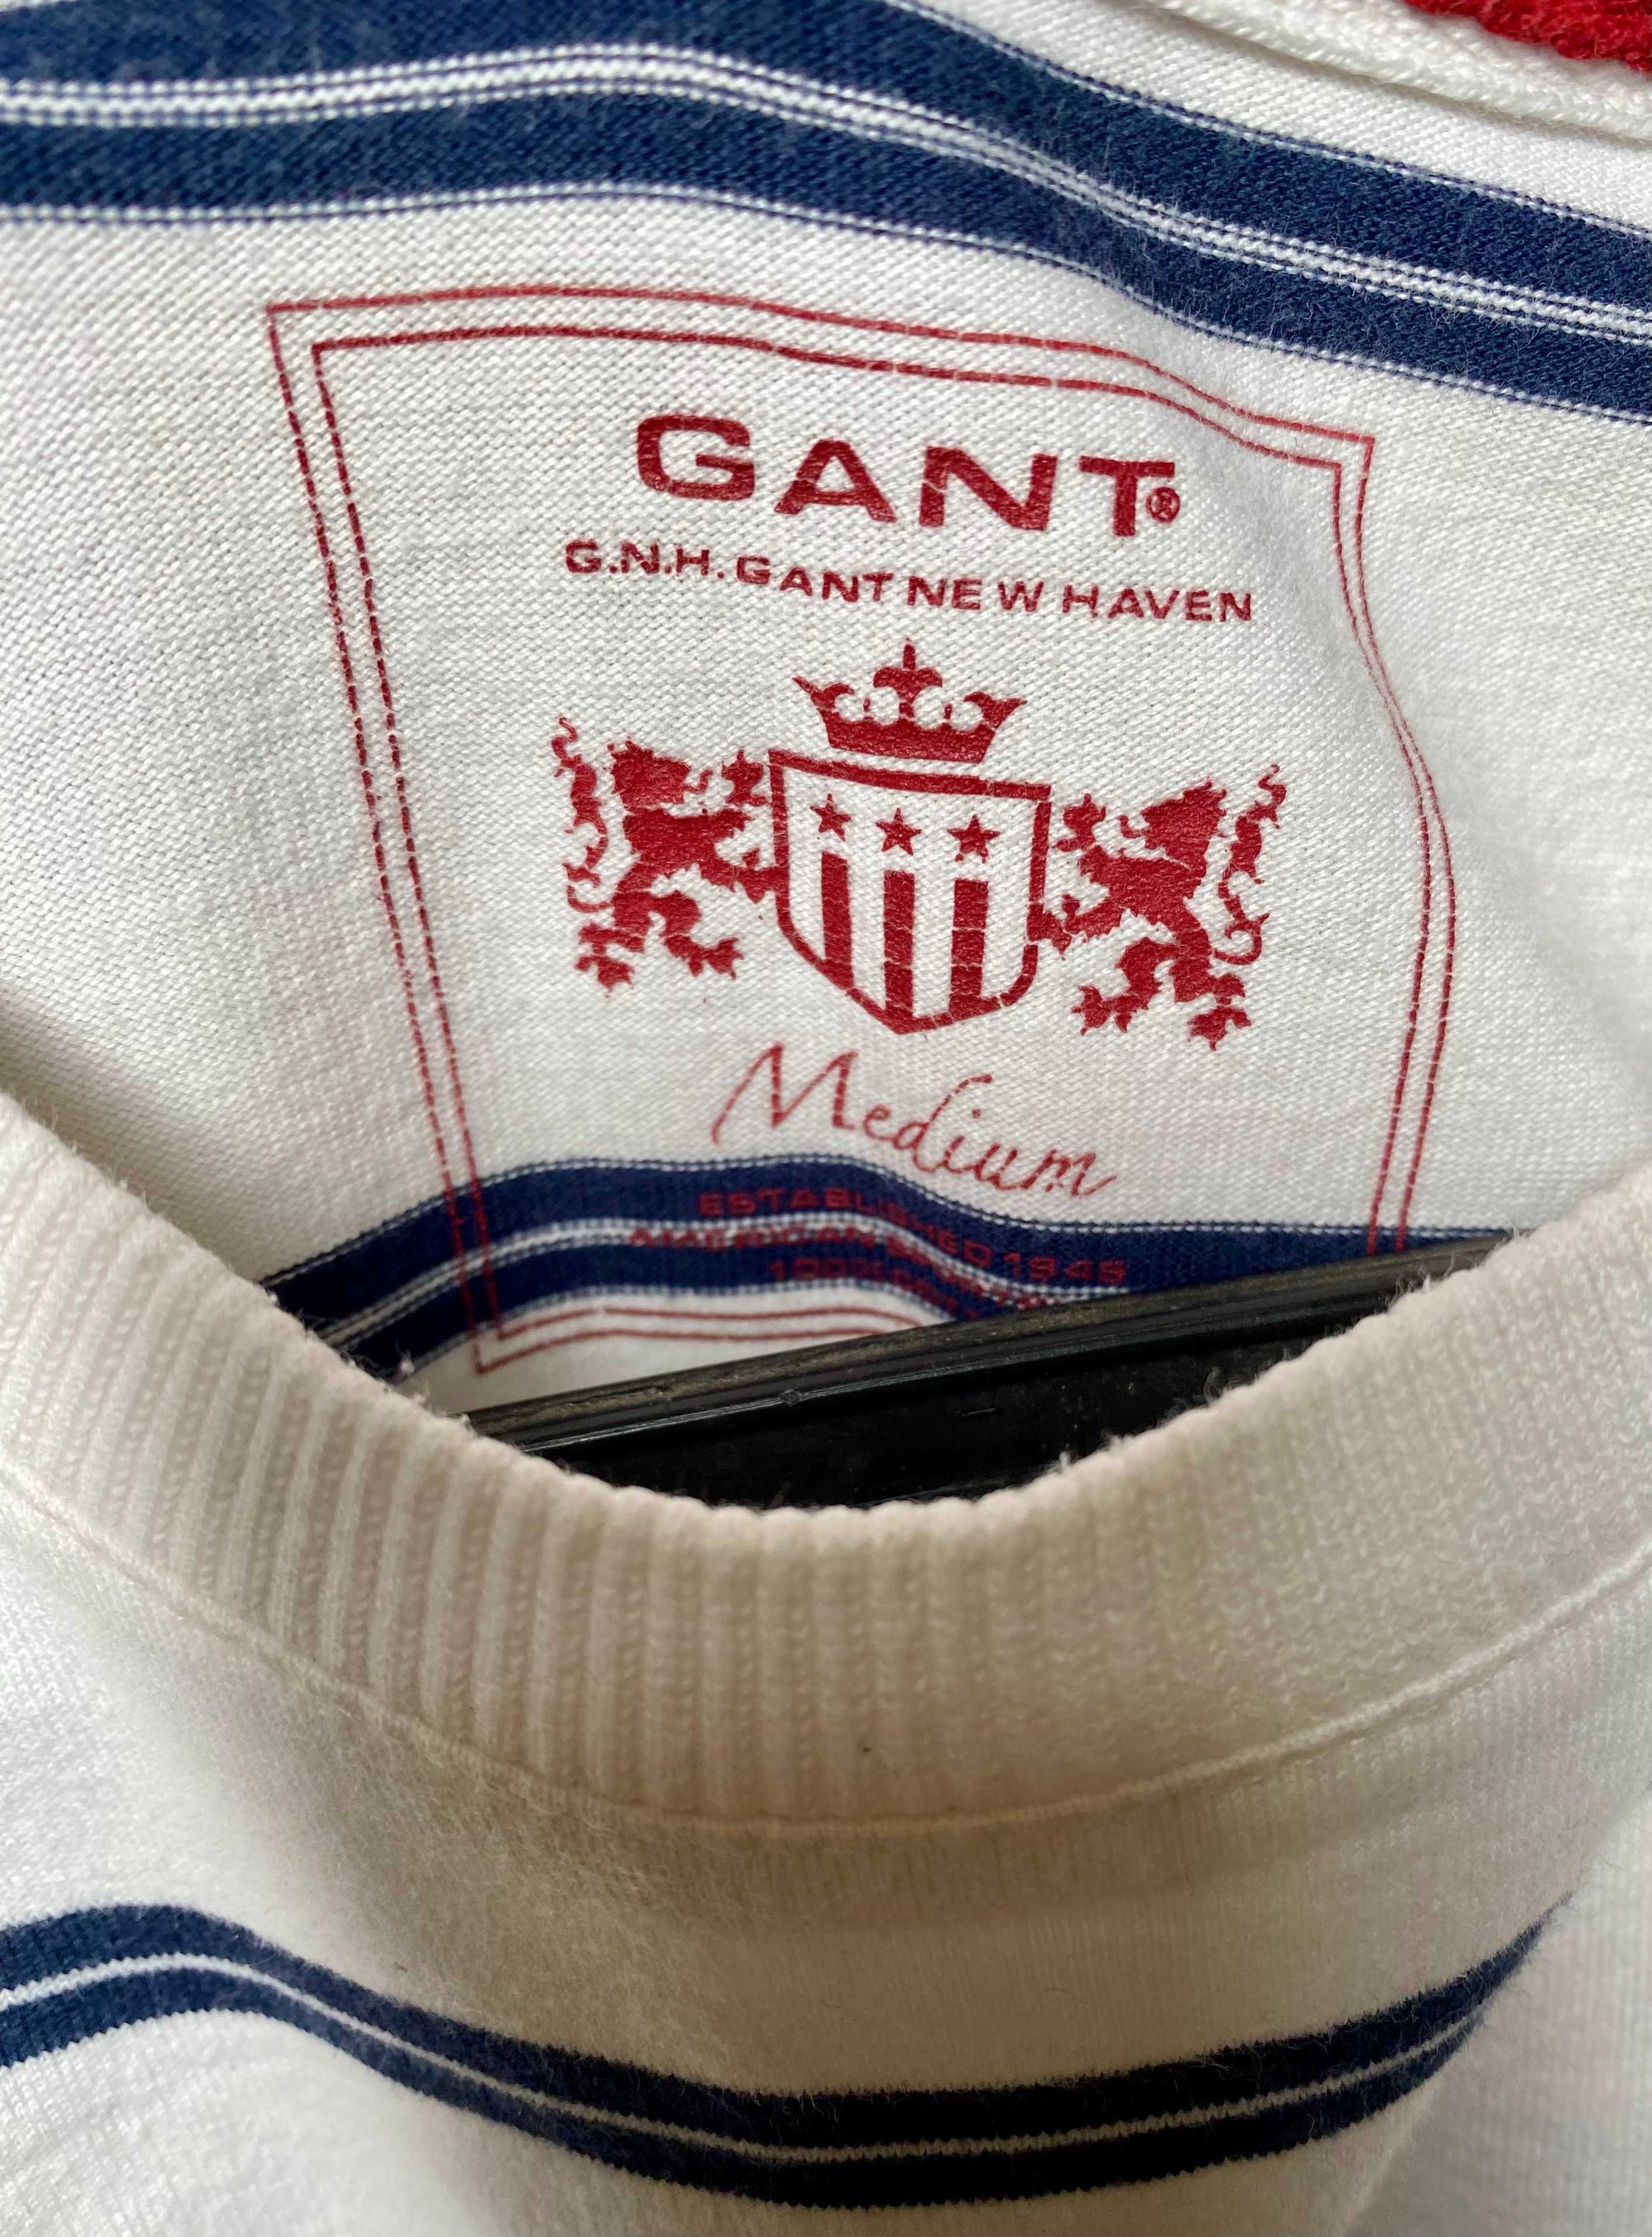 tshirt nova original Gant saldo